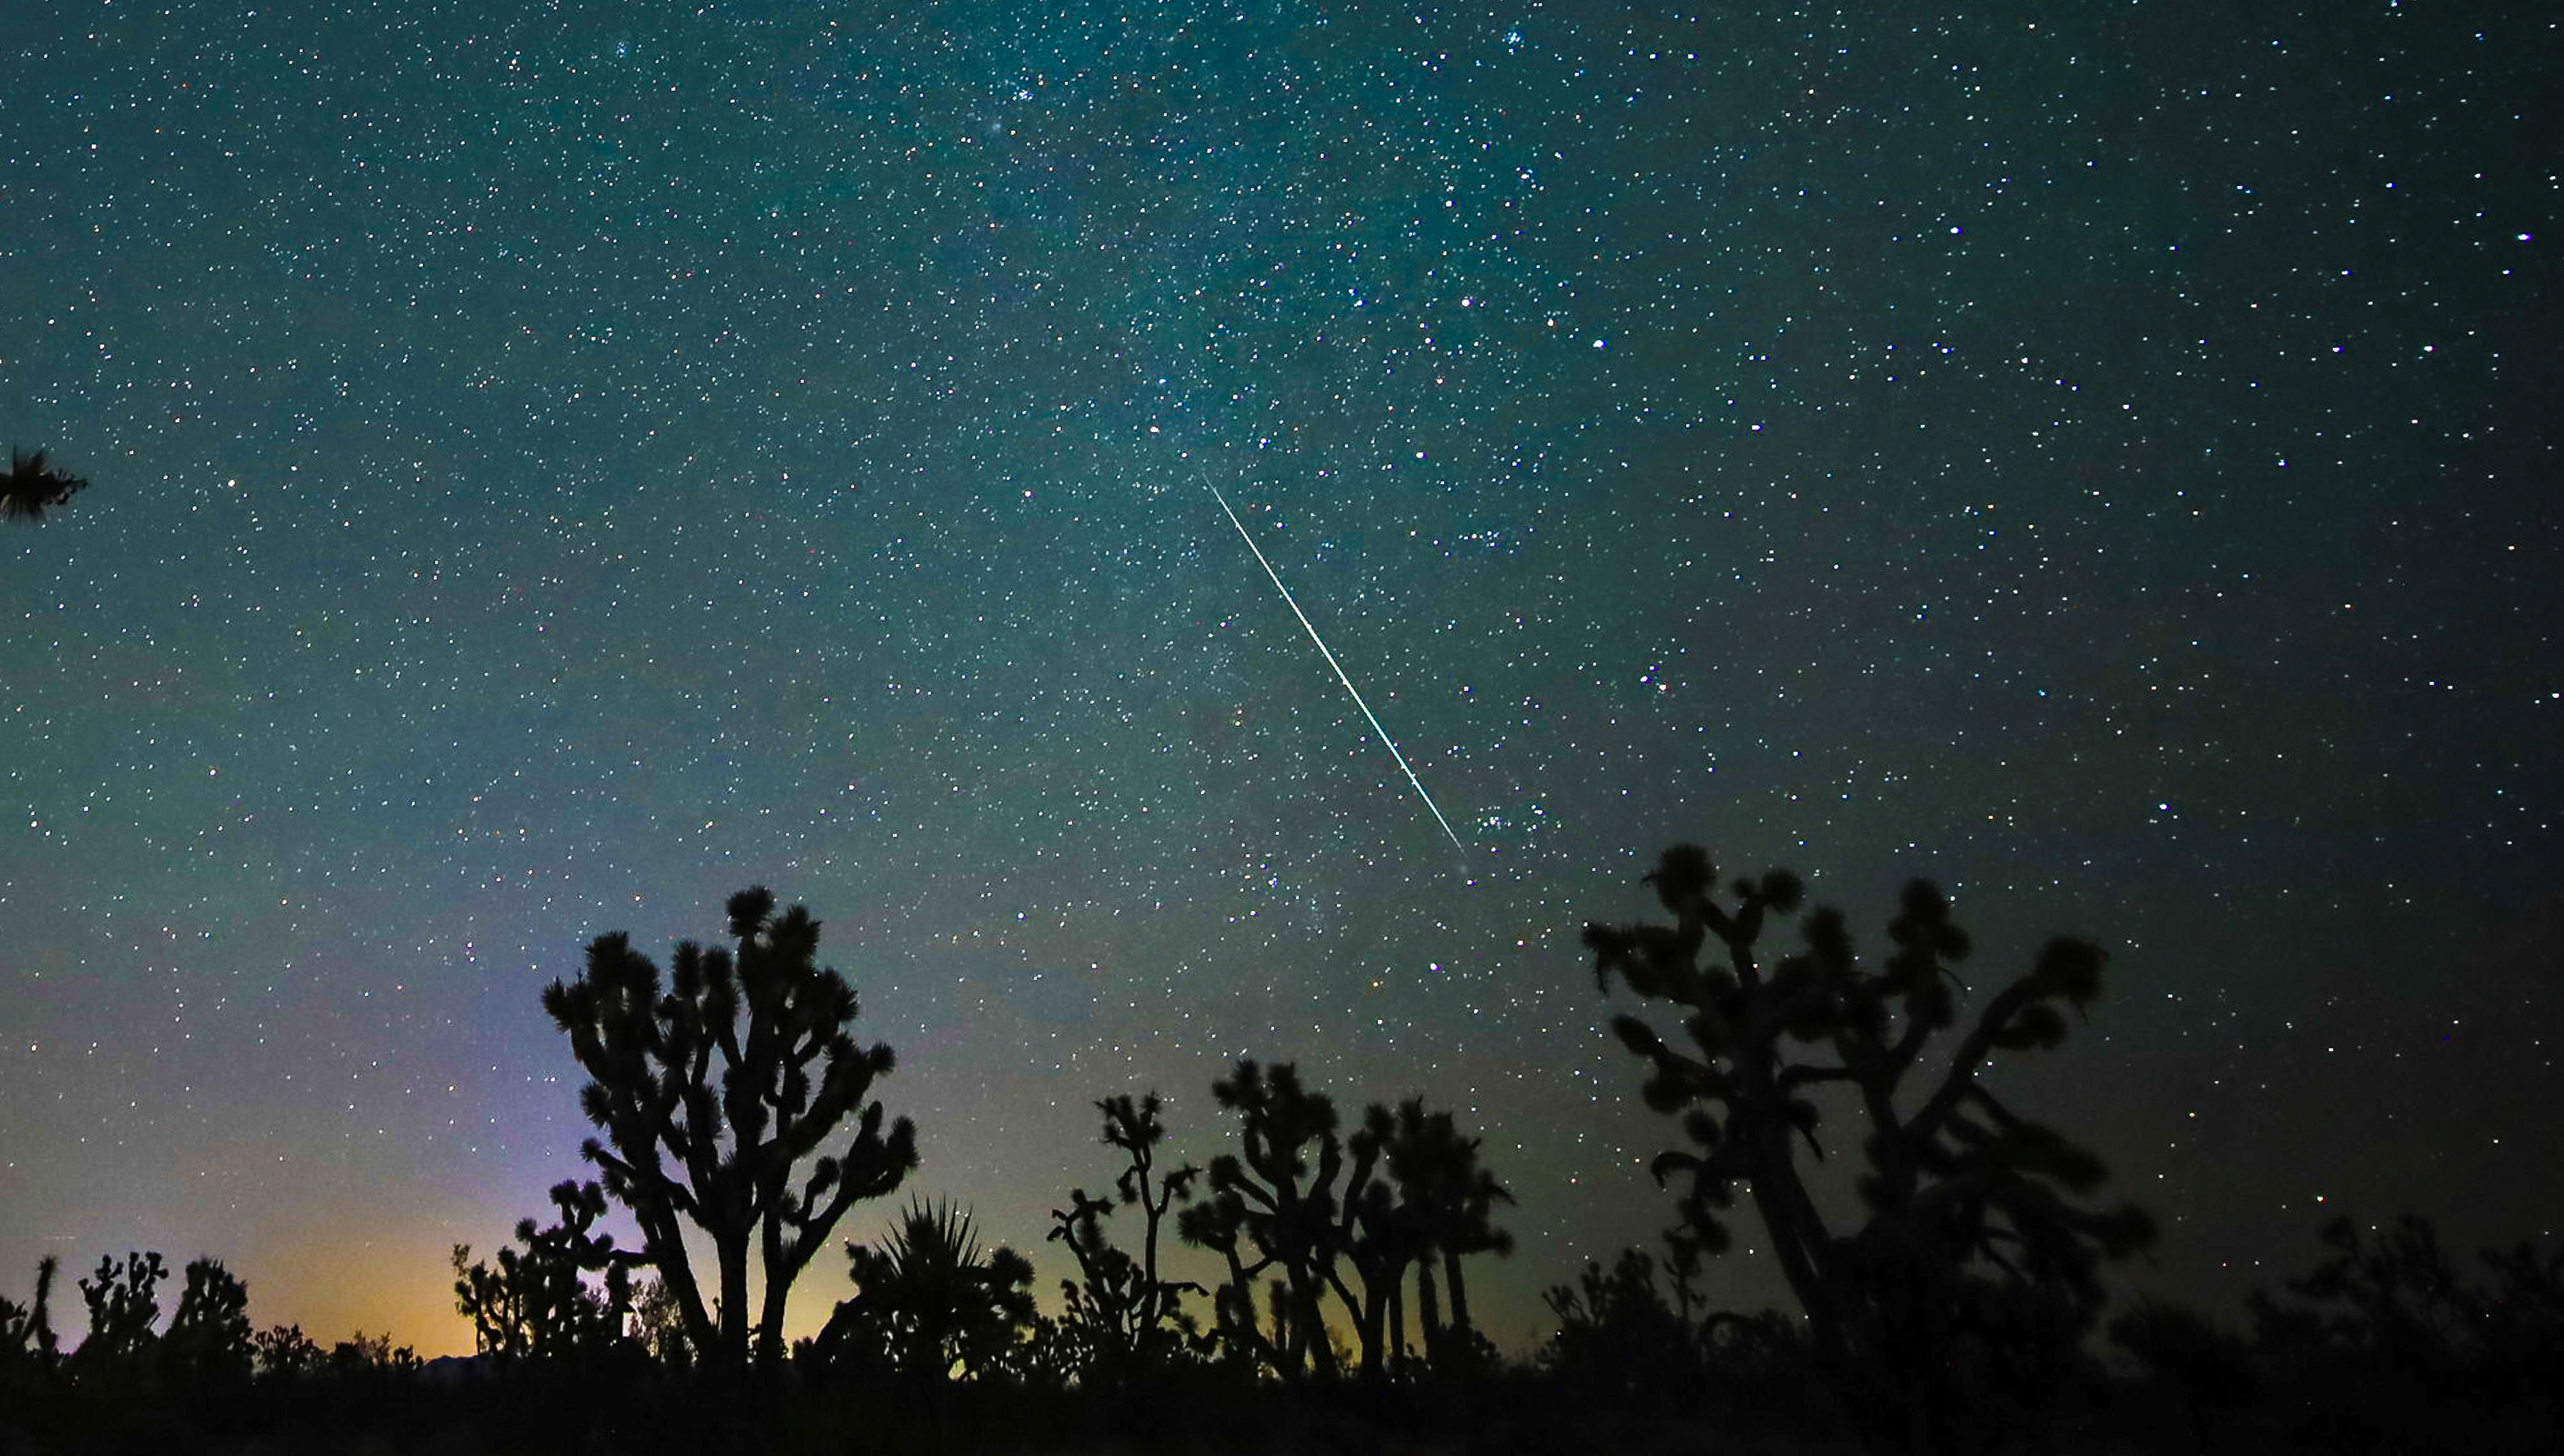 meteors streak through the starry night sky, leaving trails of light